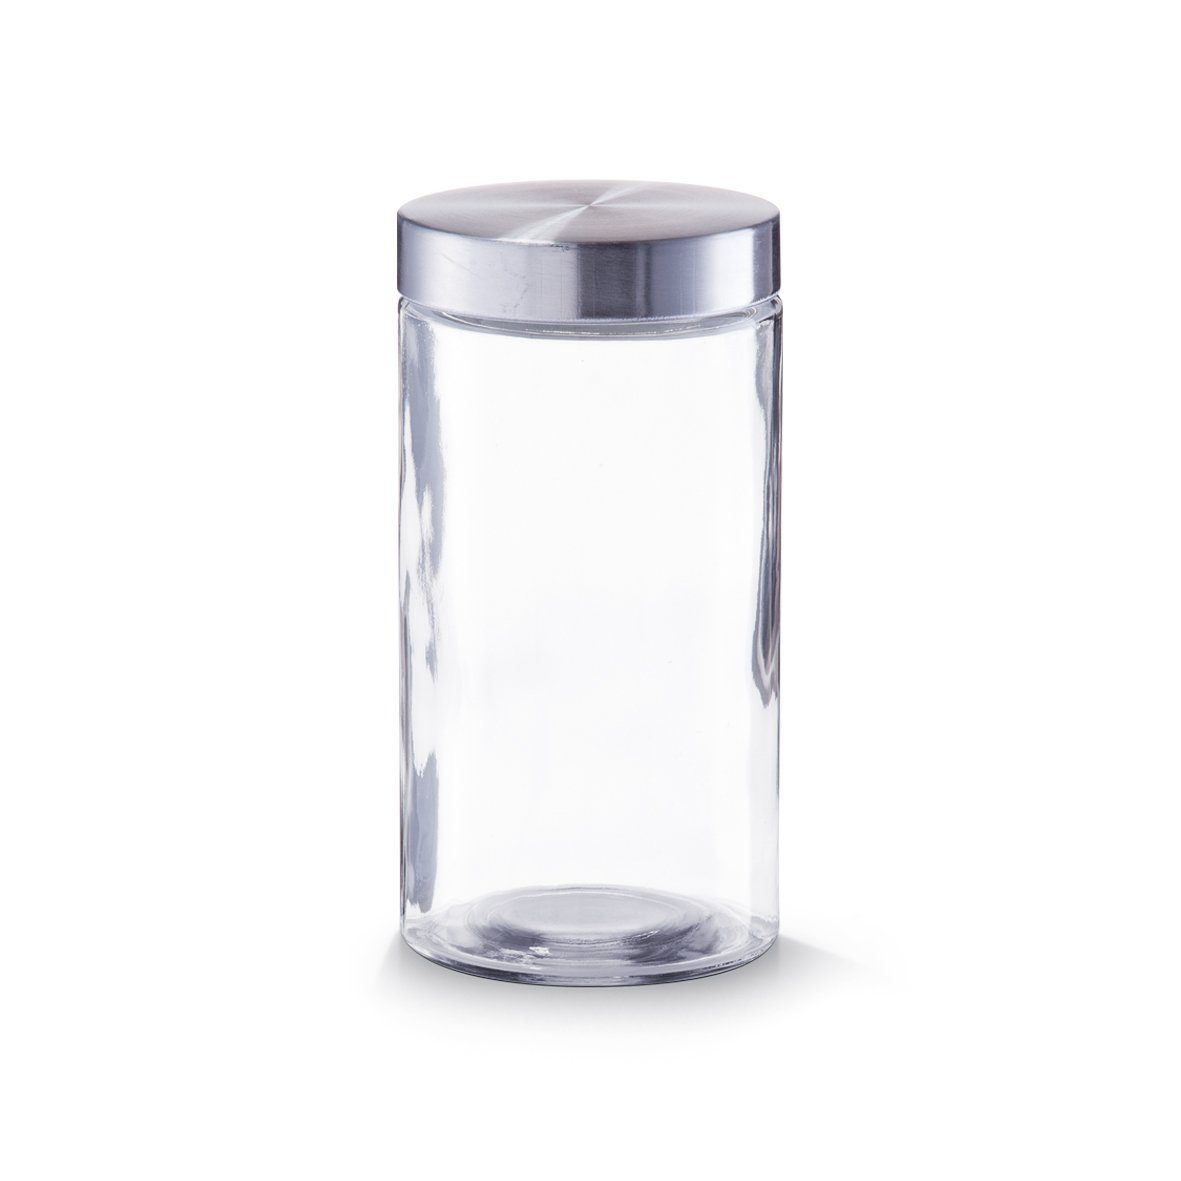 m. x Present 1600 21,5 Glas/Edelstahl, Glas/Edelstahl, Vorratsglas Ø11 transparent, Vorratsglas Edelstahldeckel, cm Zeller ml,